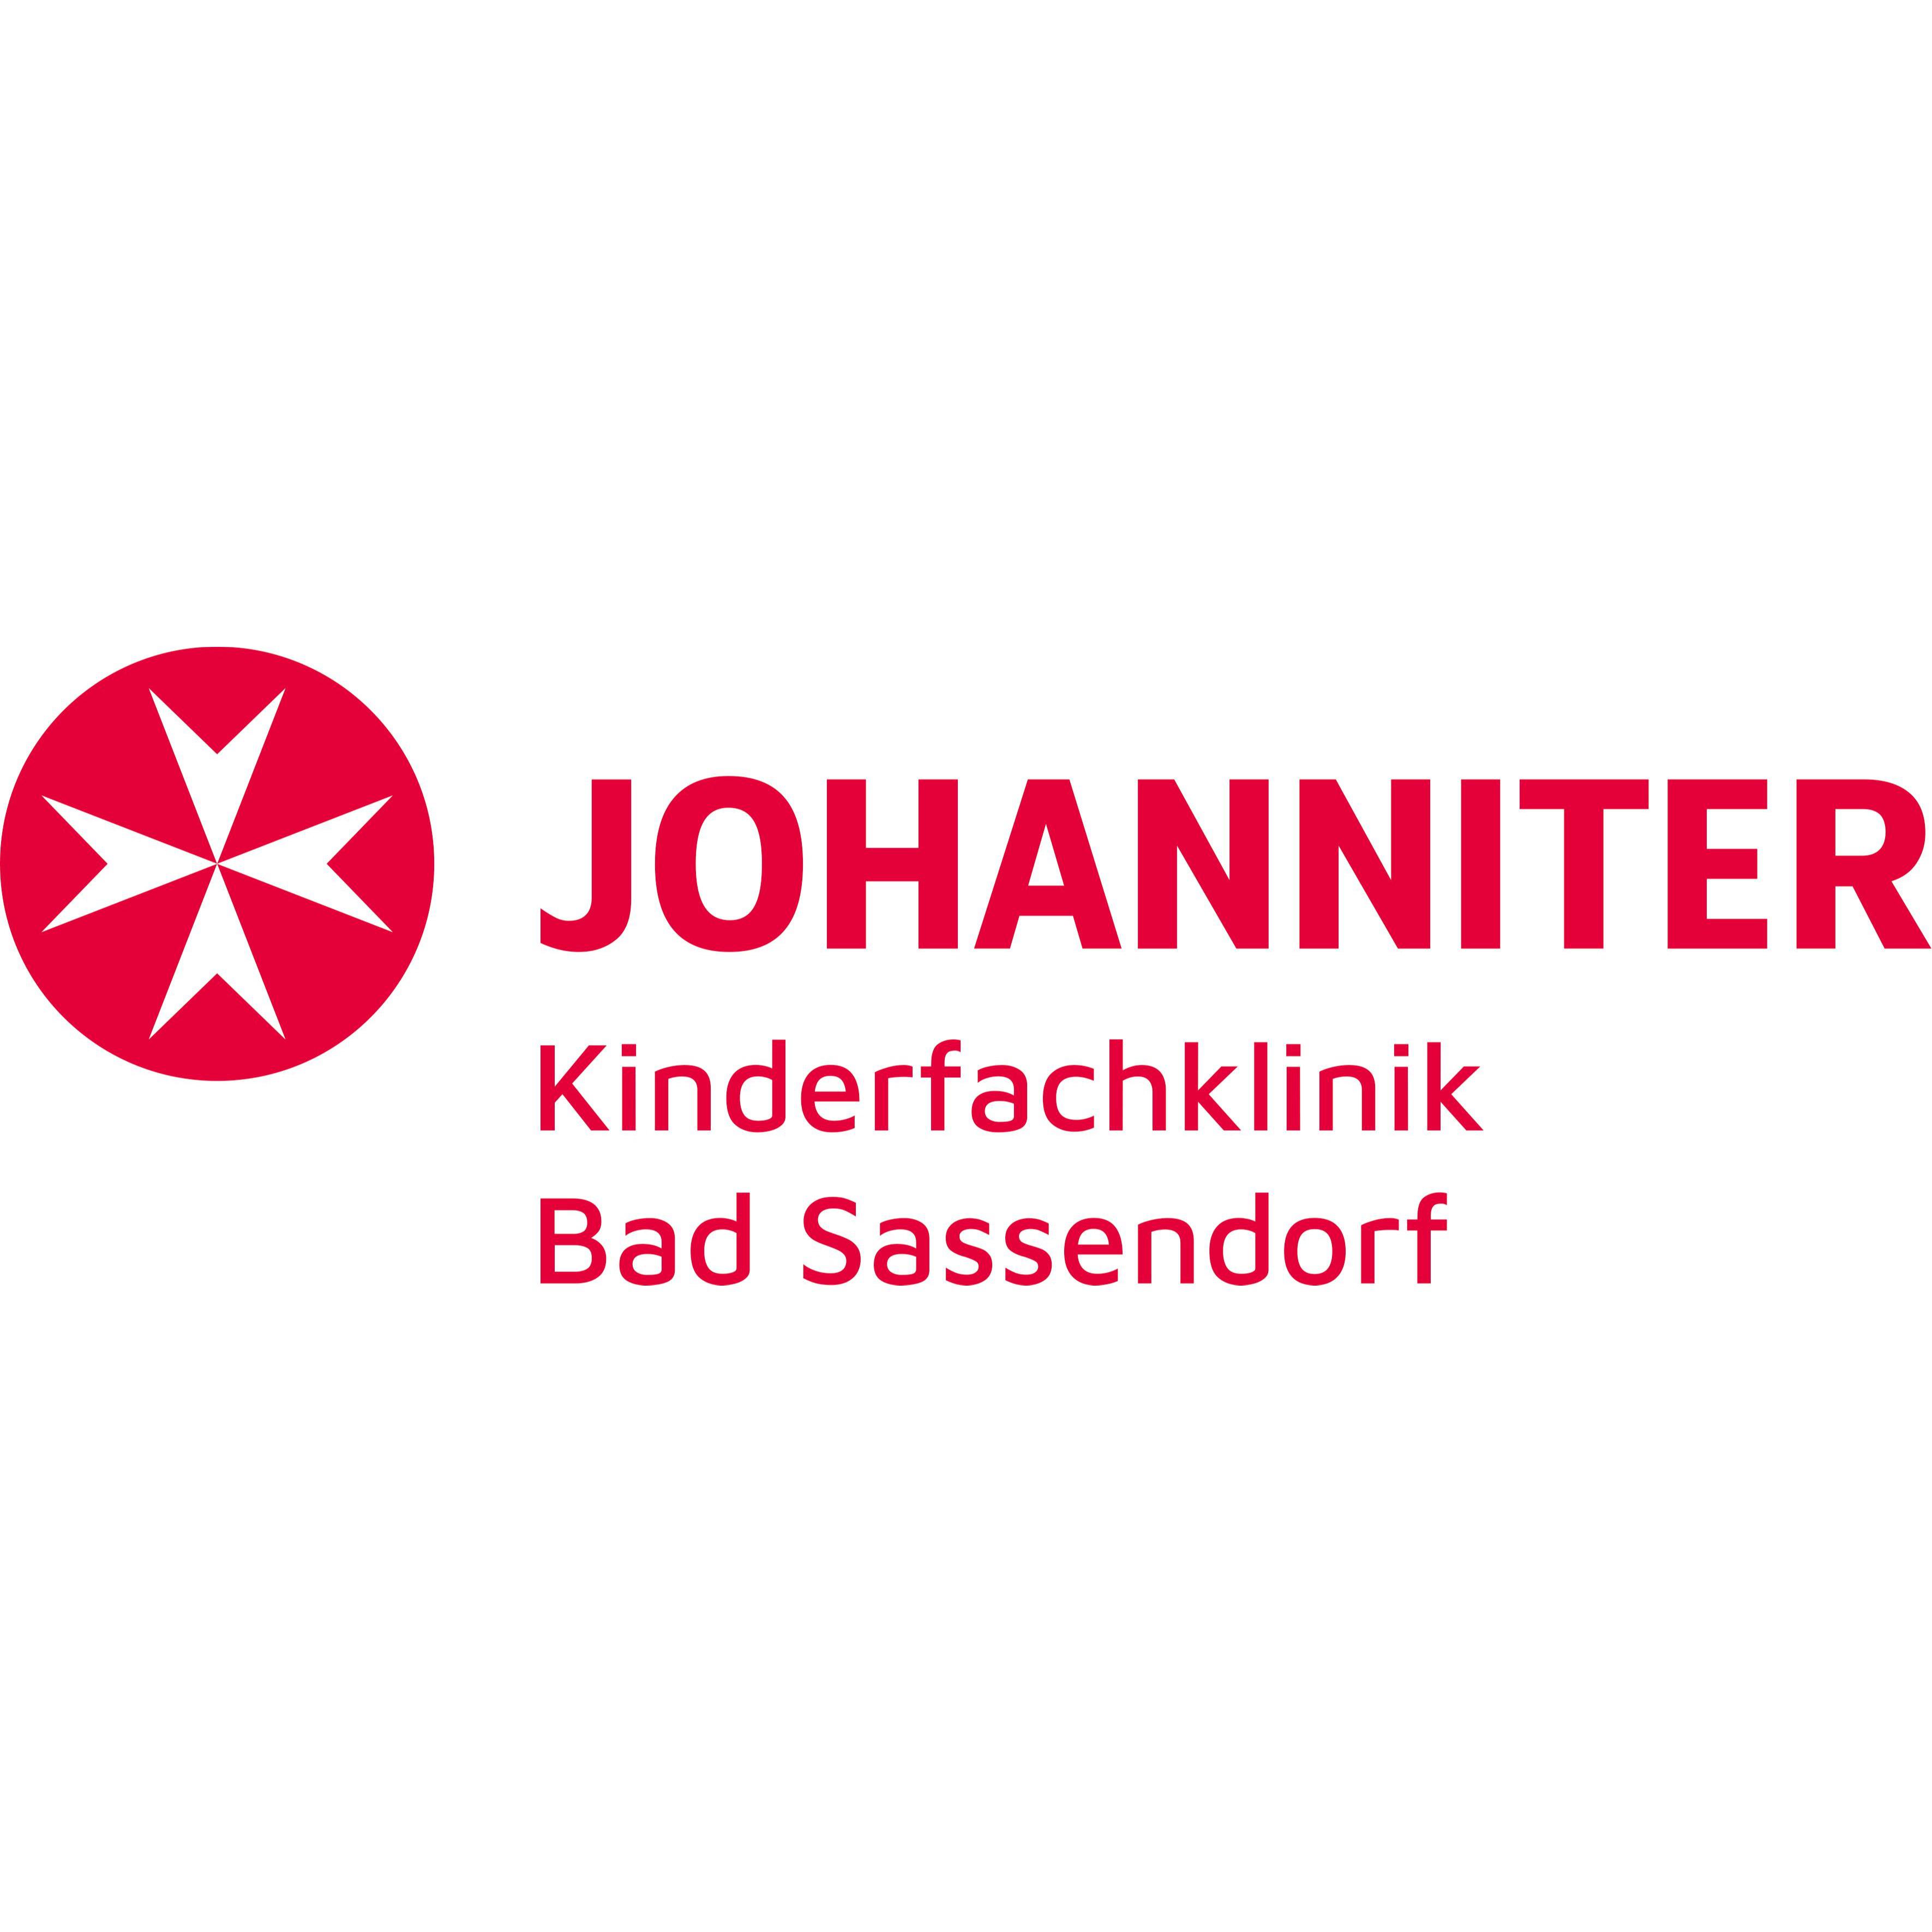 Kinderfachklinik Bad Sassendorf in Bad Sassendorf - Logo